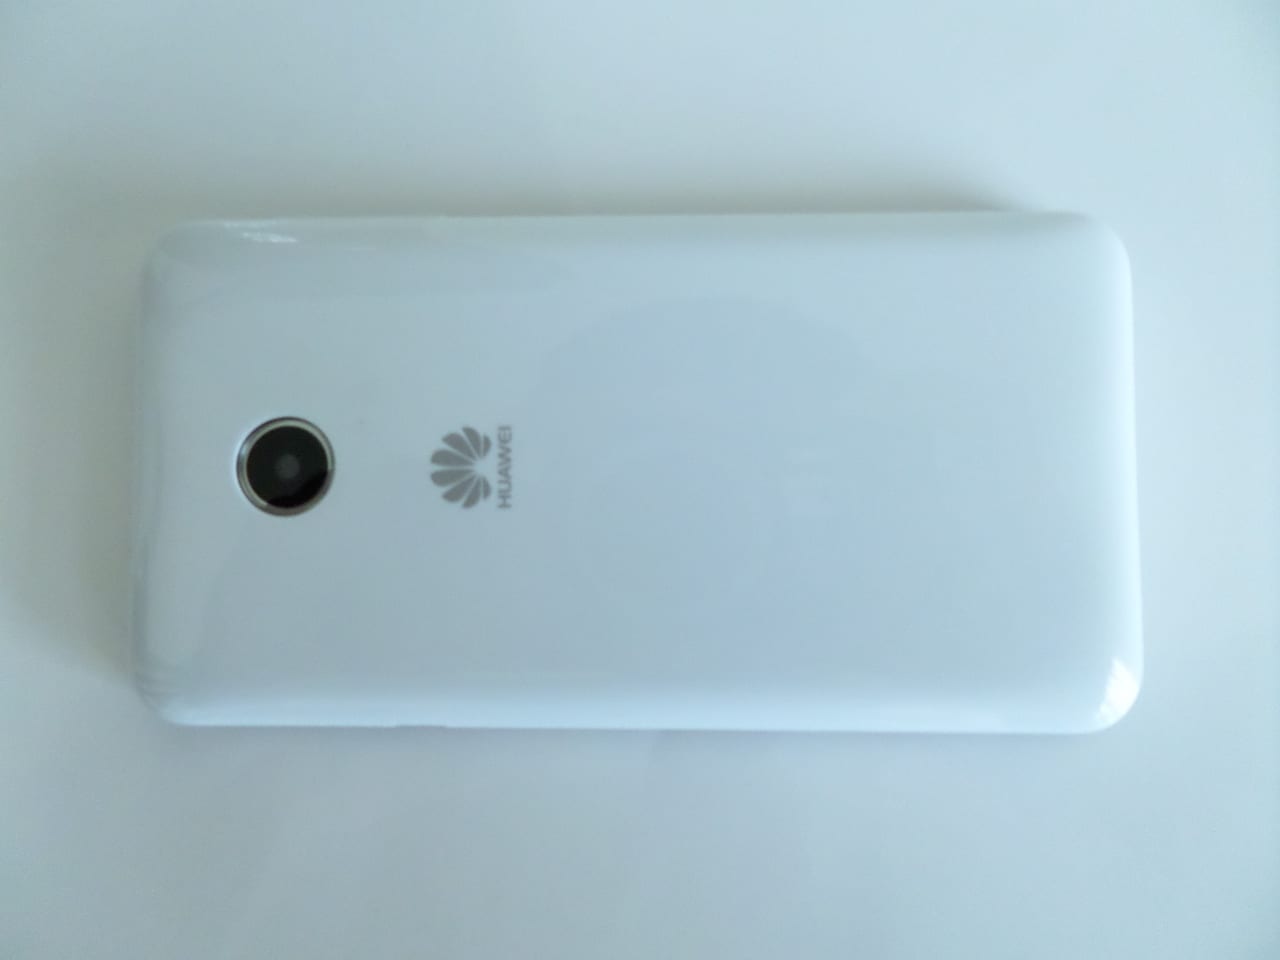 Huawei Ascend smartphone